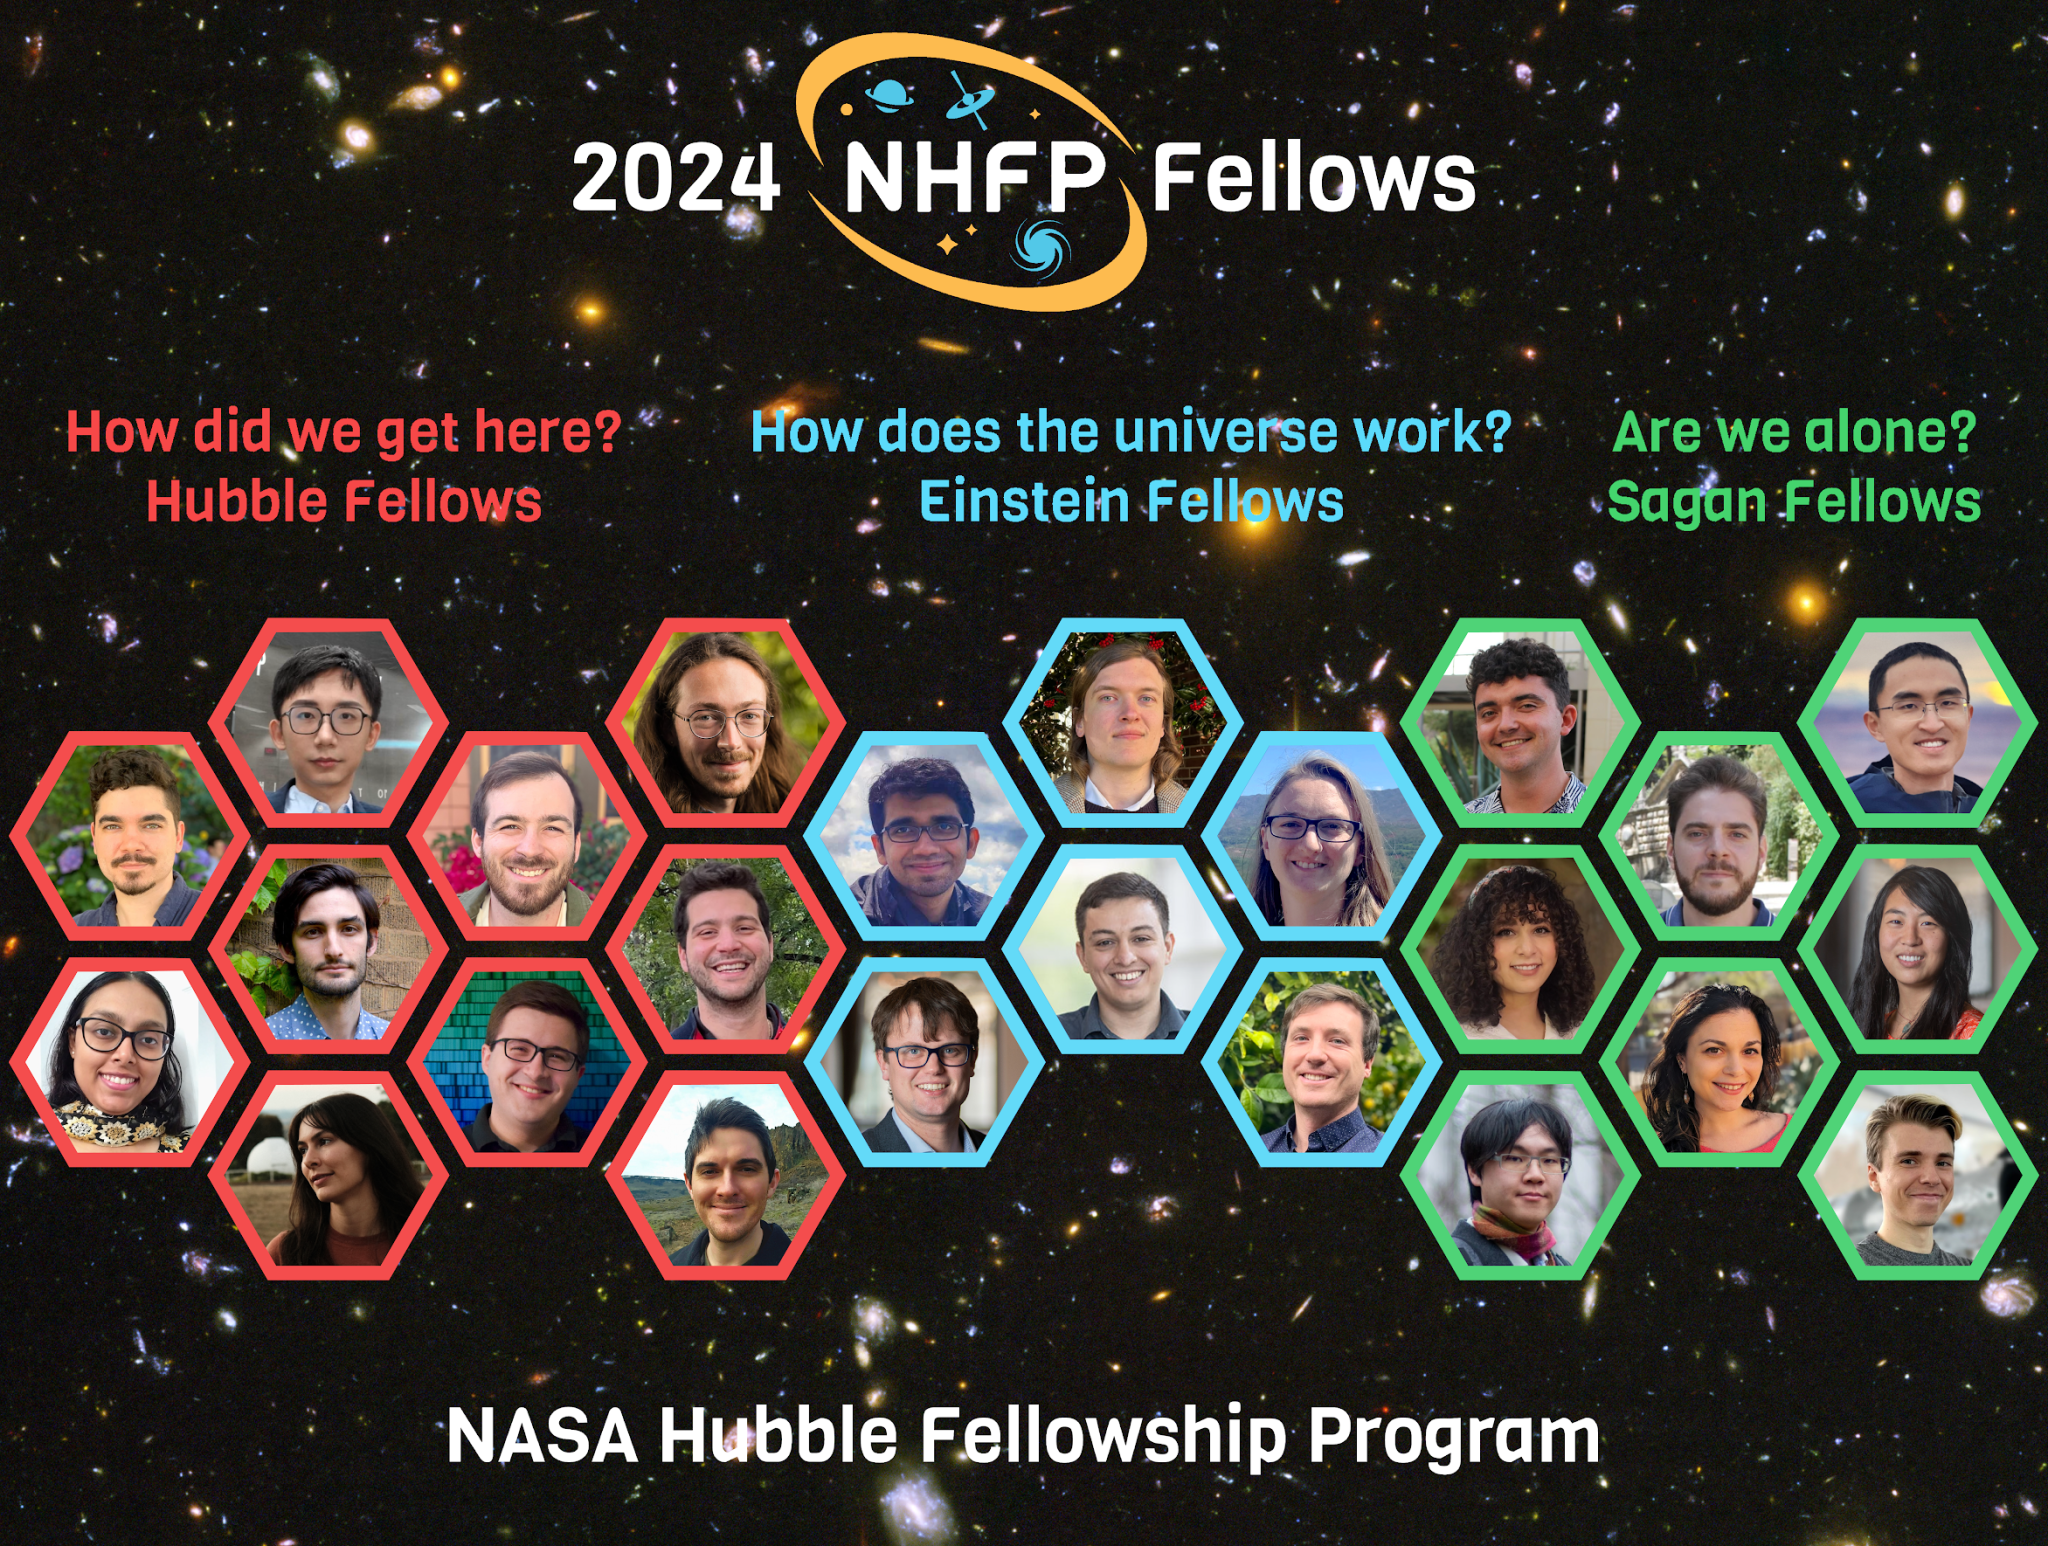 The class of 2024 NHFP Fellows are shown in this photo montage (top to bottom, left to right): The Hubble Fellows (seen in the red hexagons) are: Michael Calzadilla, Sanskriti Das, Yue Hu, Wynn Jacobson-Galan, Madeleine McKenzie, Jed McKinney, Andrew Saydjari, Peter Senchyna, Raphael Skalidis and Adam Smercina. The Einstein Fellows (seen in the blue hexagons) are: Vishal Baibhav, Jordy Davelaar, Alexander Dittmann, Cristhian Garcia Quintero, Amelia (Lia) Hankla and Keefe Mitman. The Sagan Fellows (seen in green hexagons) are: Jaren Ashcraft, Kiersten Boley, Cheng Han Hsieh, Rafael Luque, Sarah Moran, Shangjia Zhang, Lily Zhao and Sebastian Zieba.